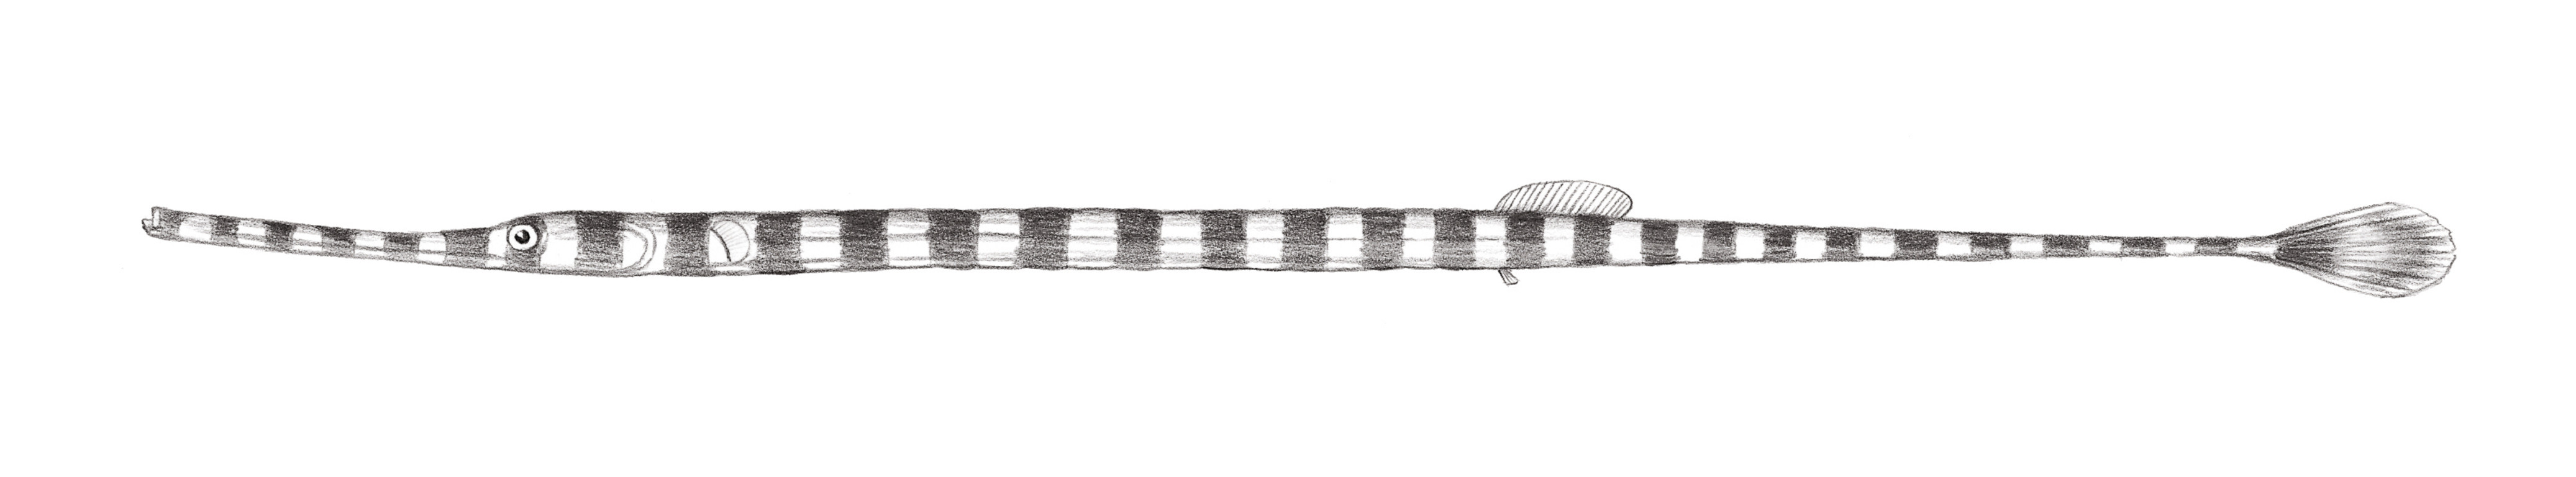 822.	帶紋矛吻海龍 Doryrhamphus dactyliophorus (Bleeker, 1853)